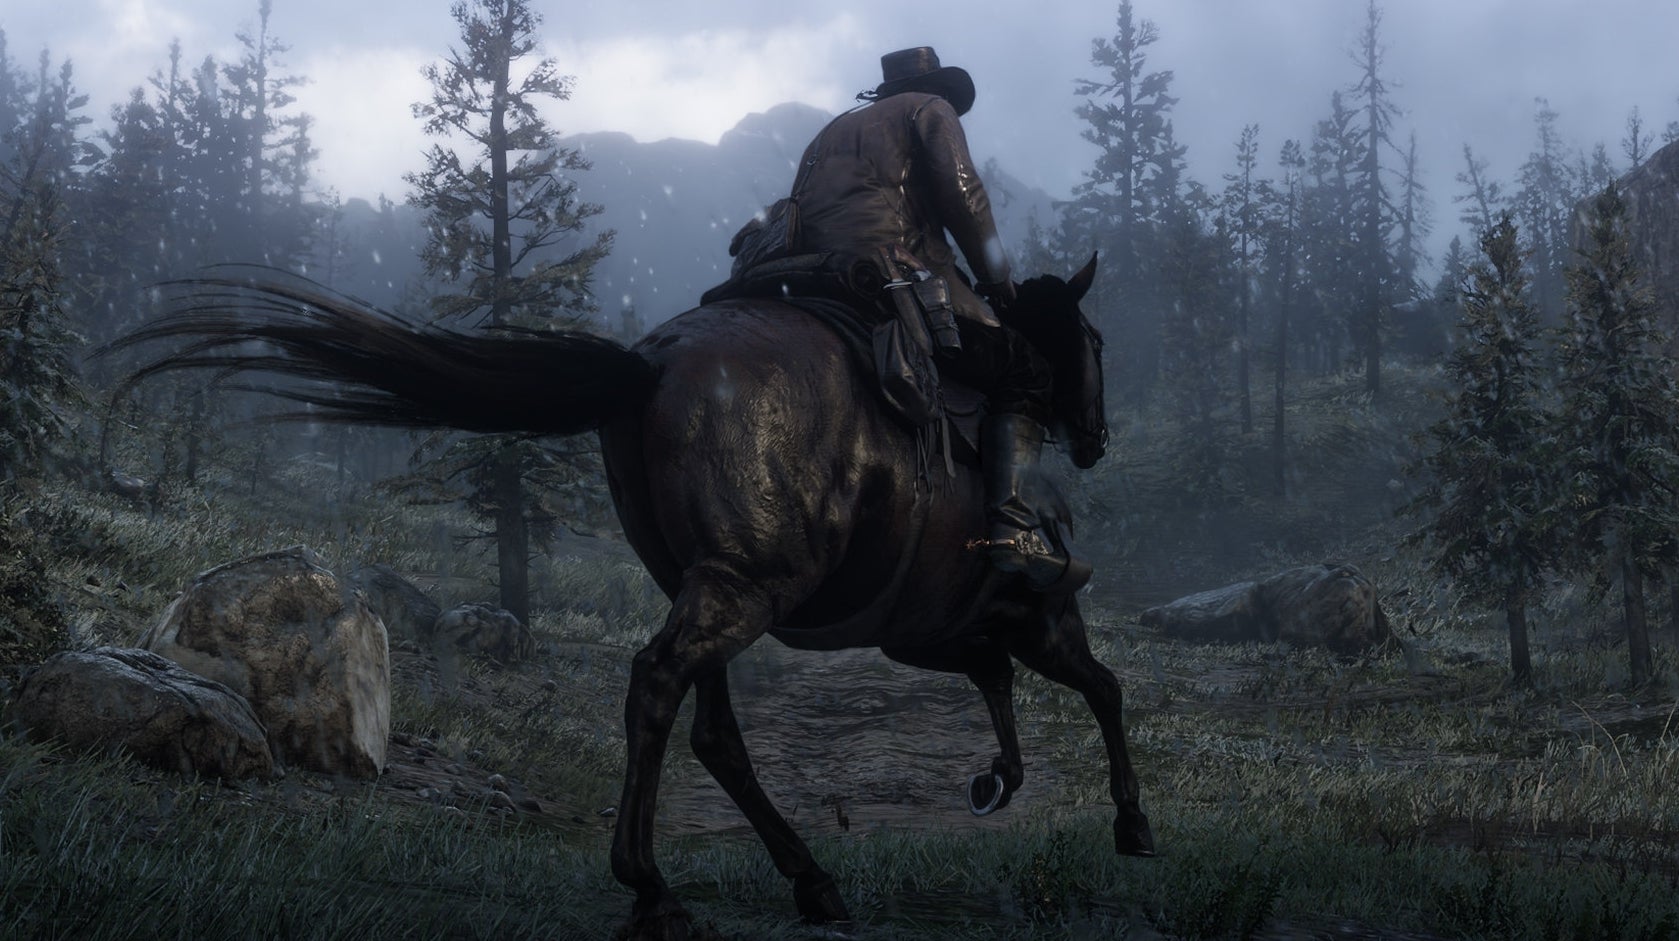 Red Dead Redemption 2 best horse, how to get horses and horse bonding explained | Eurogamer.net